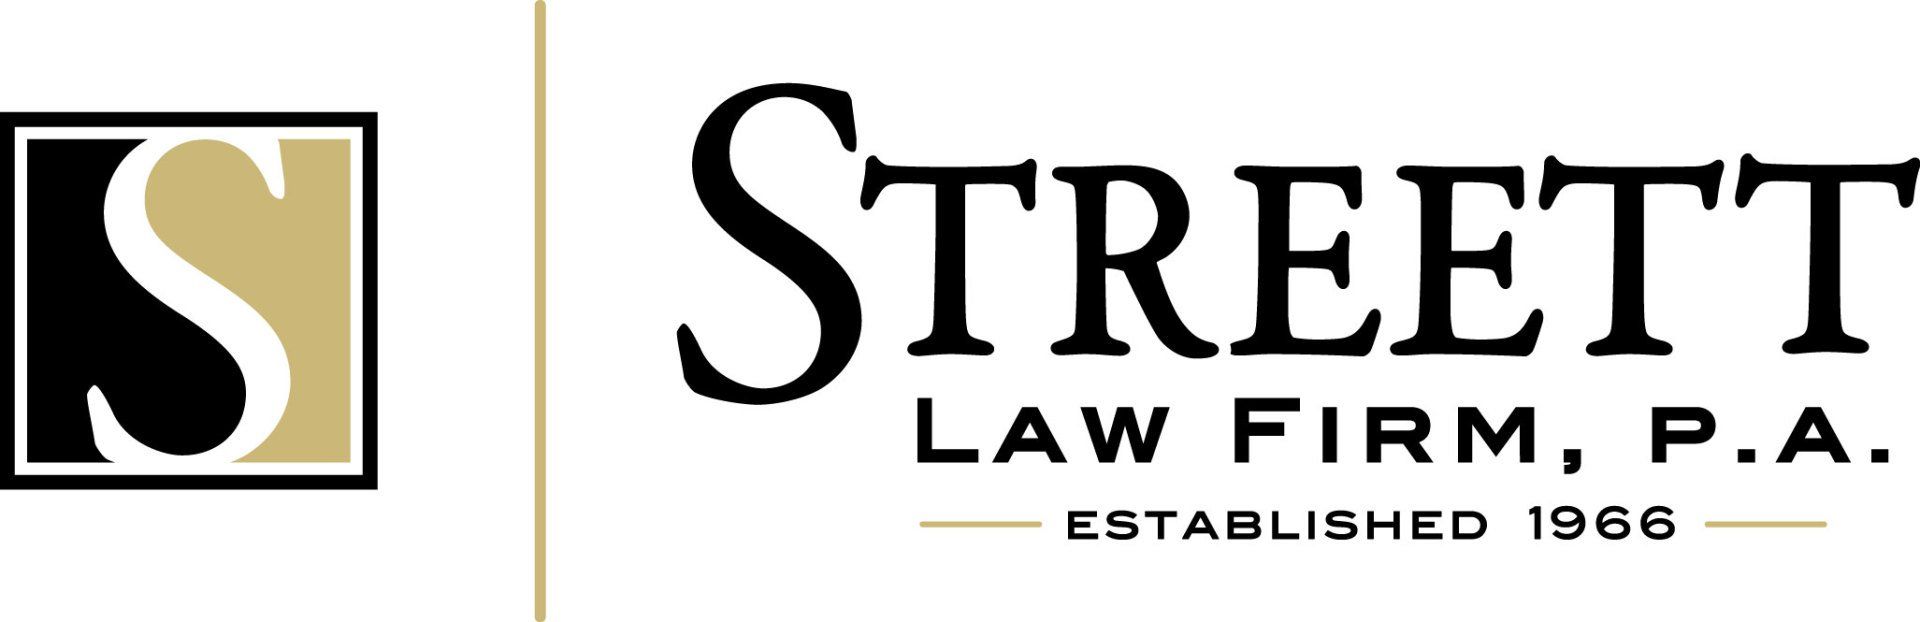 Streett Law Firm P.A.